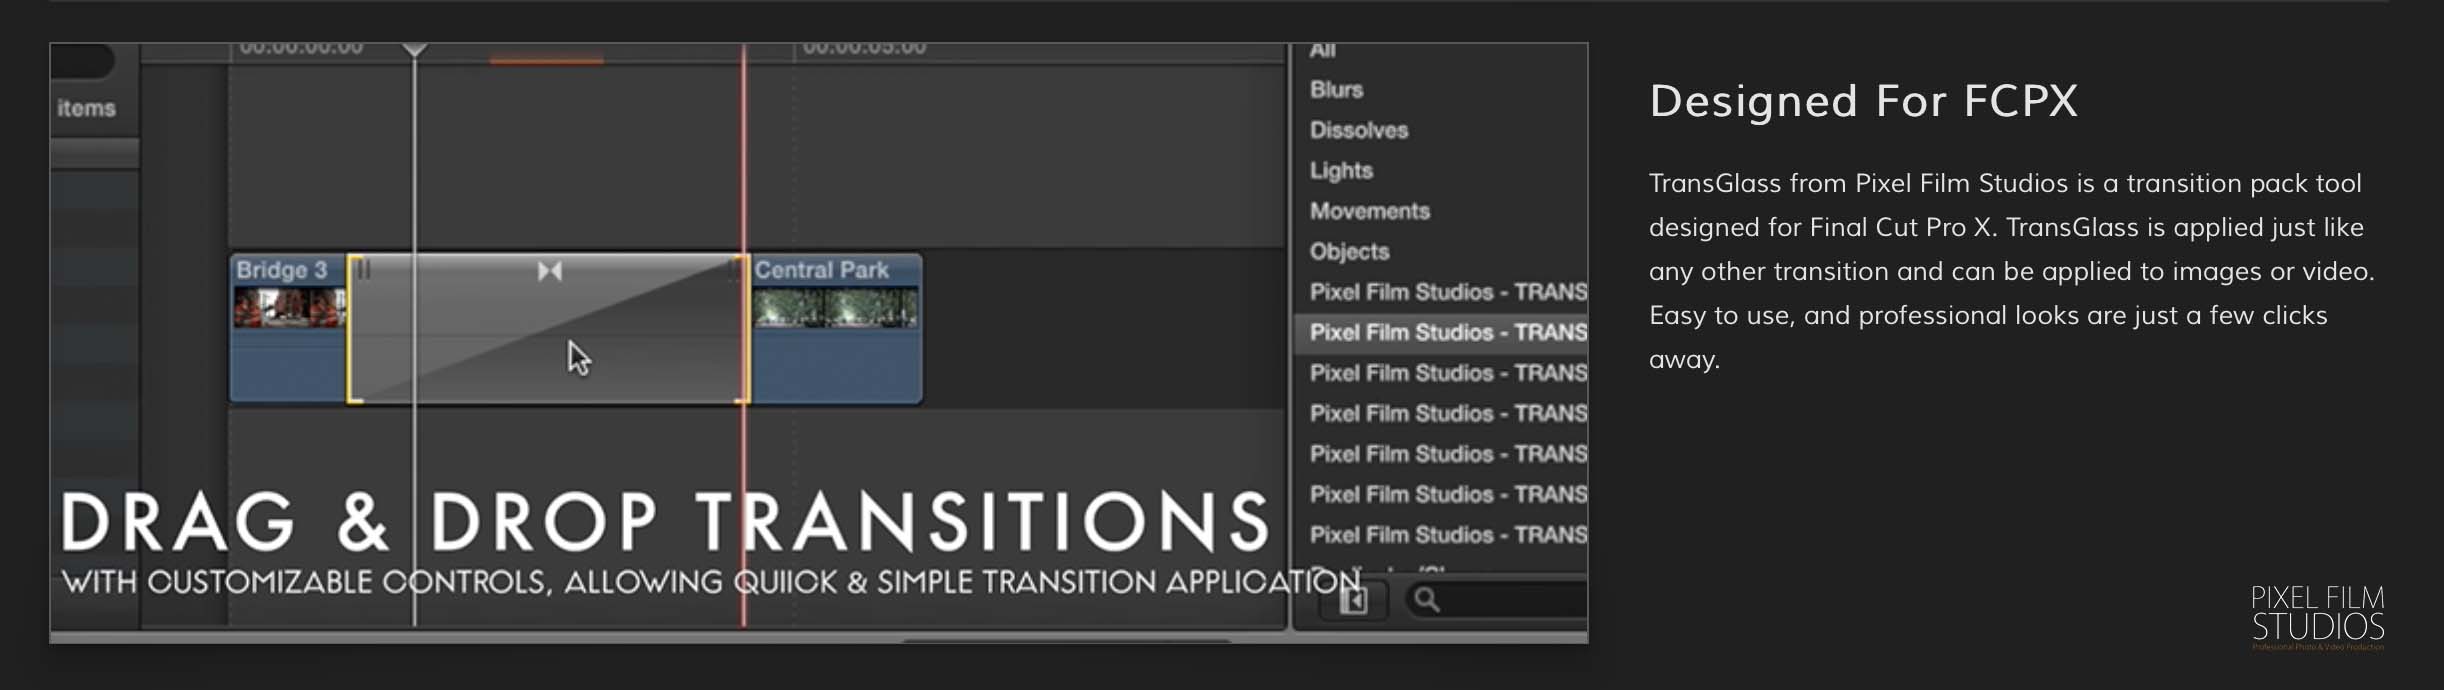 TransGlass Transition for Final Cut Pro X from Pixel Film Studios